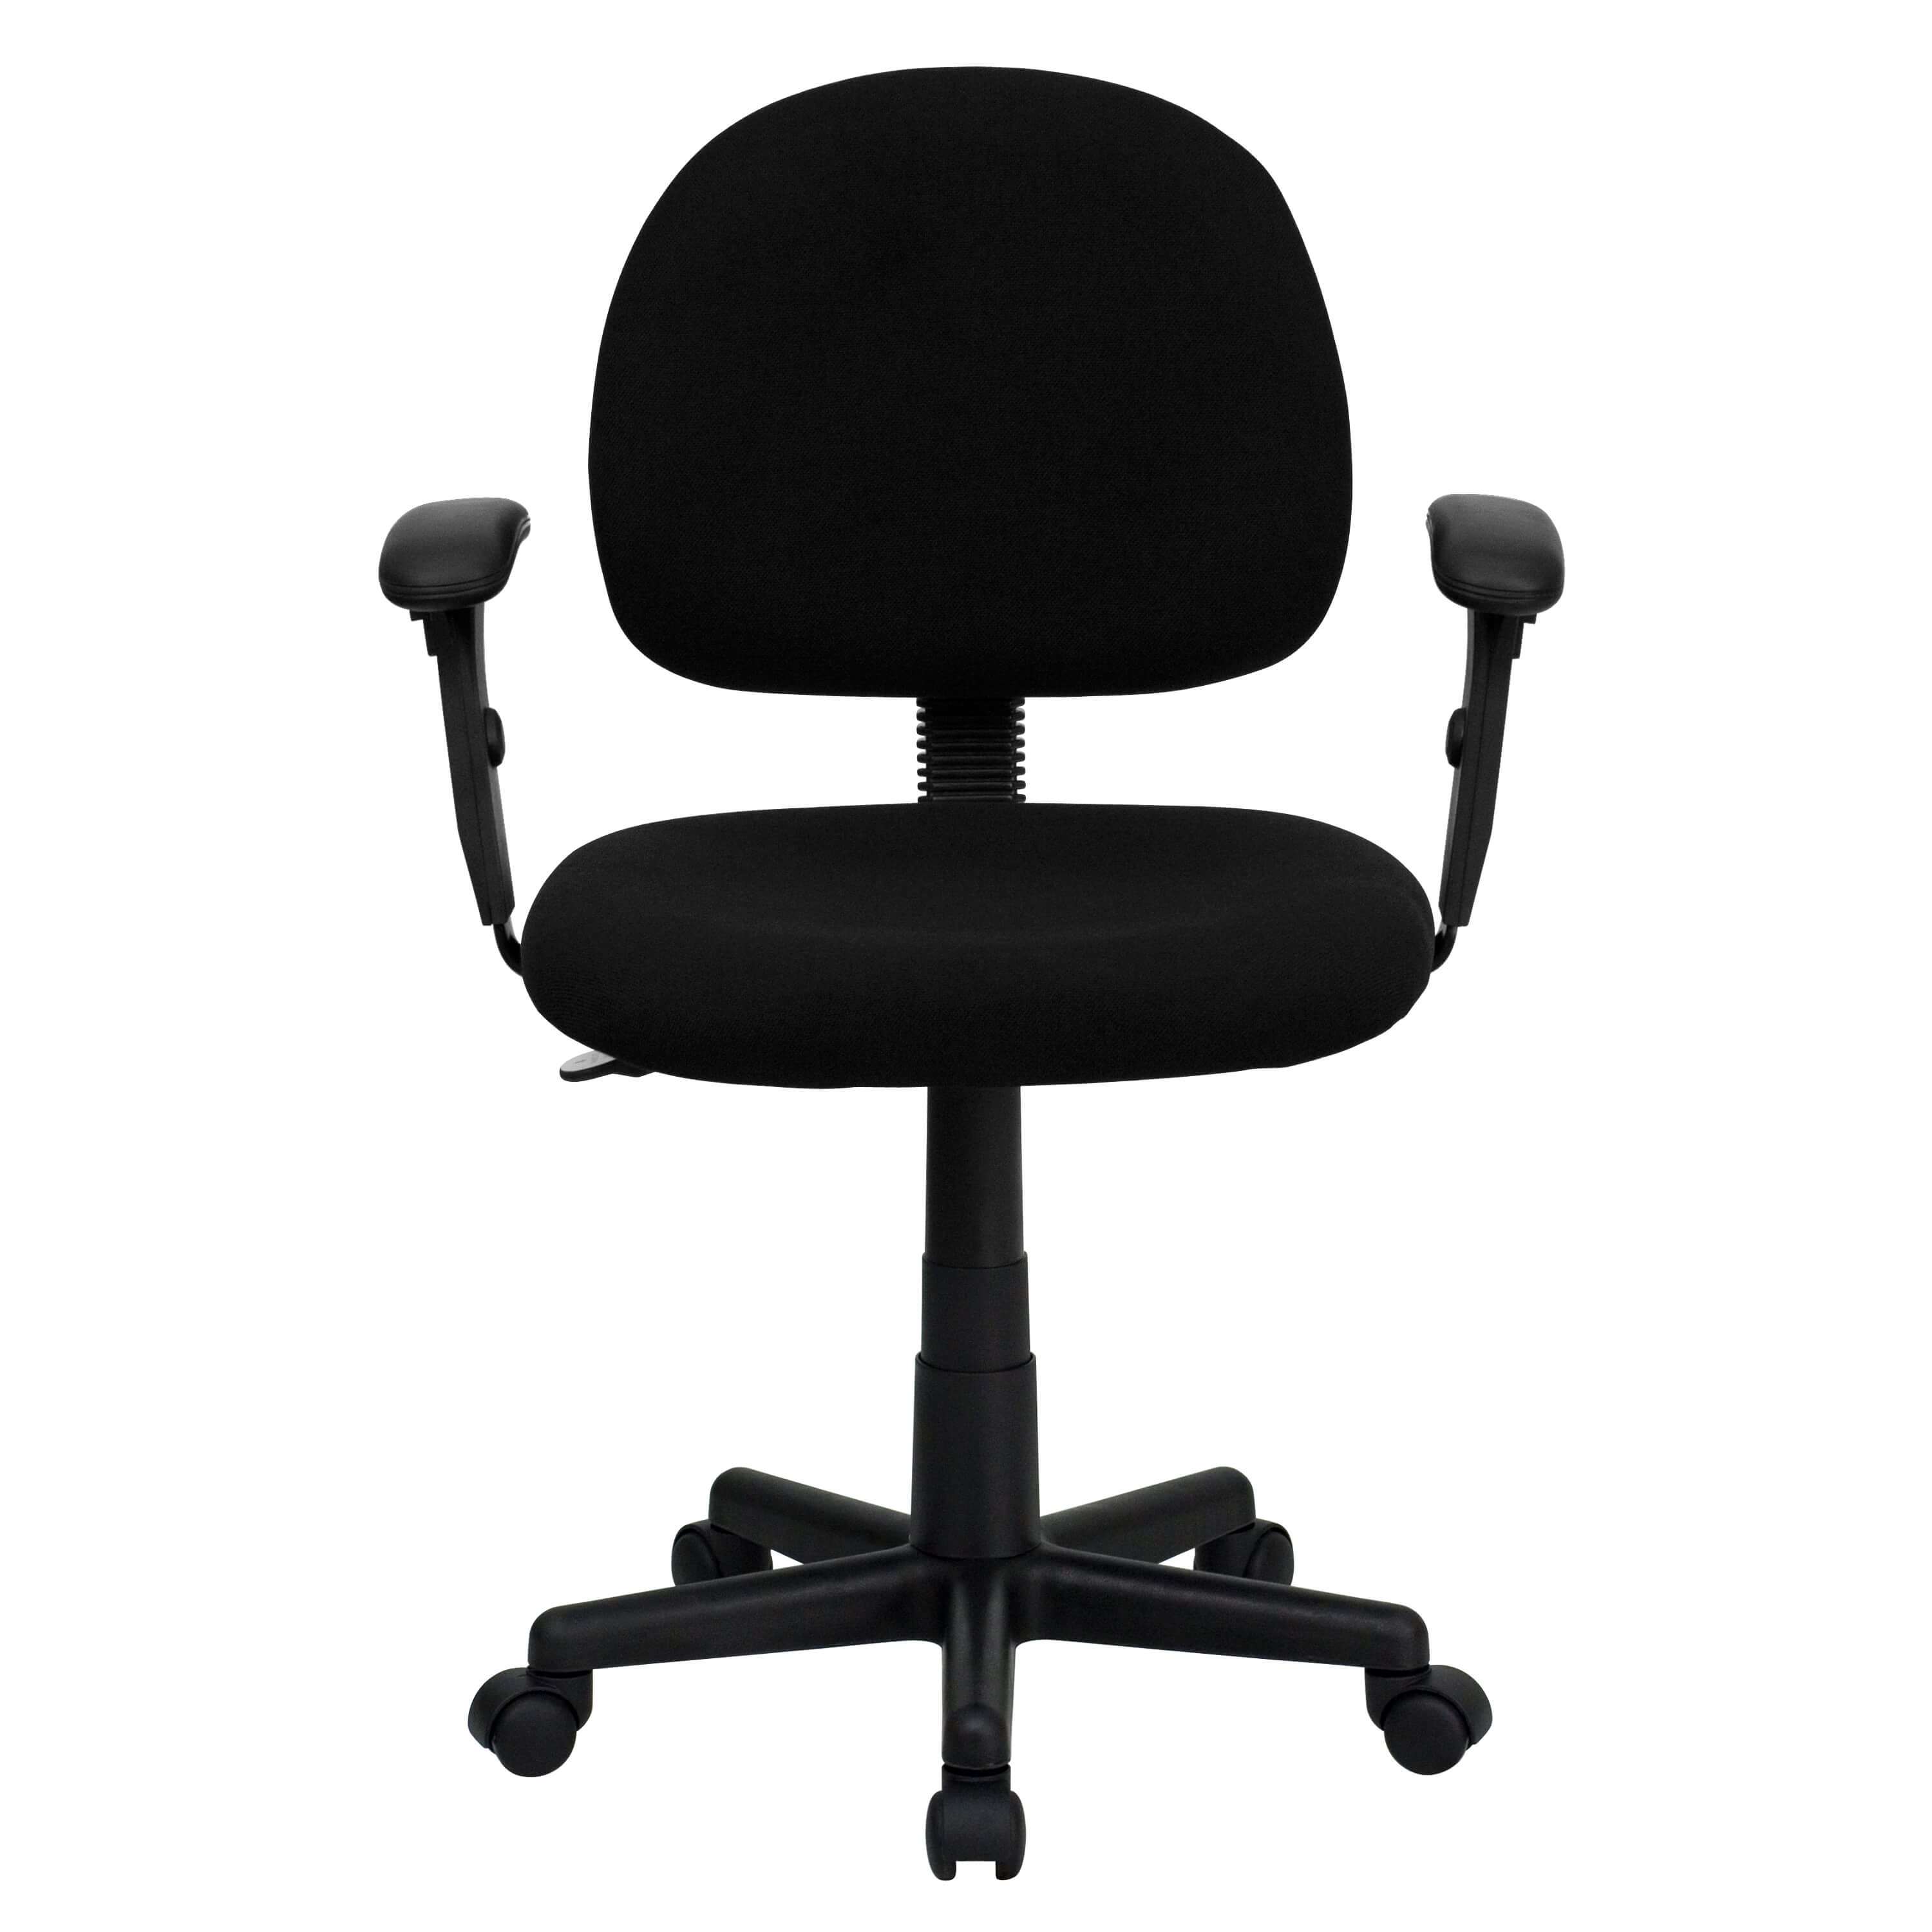 Cool desk chairs CUB BT 660 1 BK GG FLA